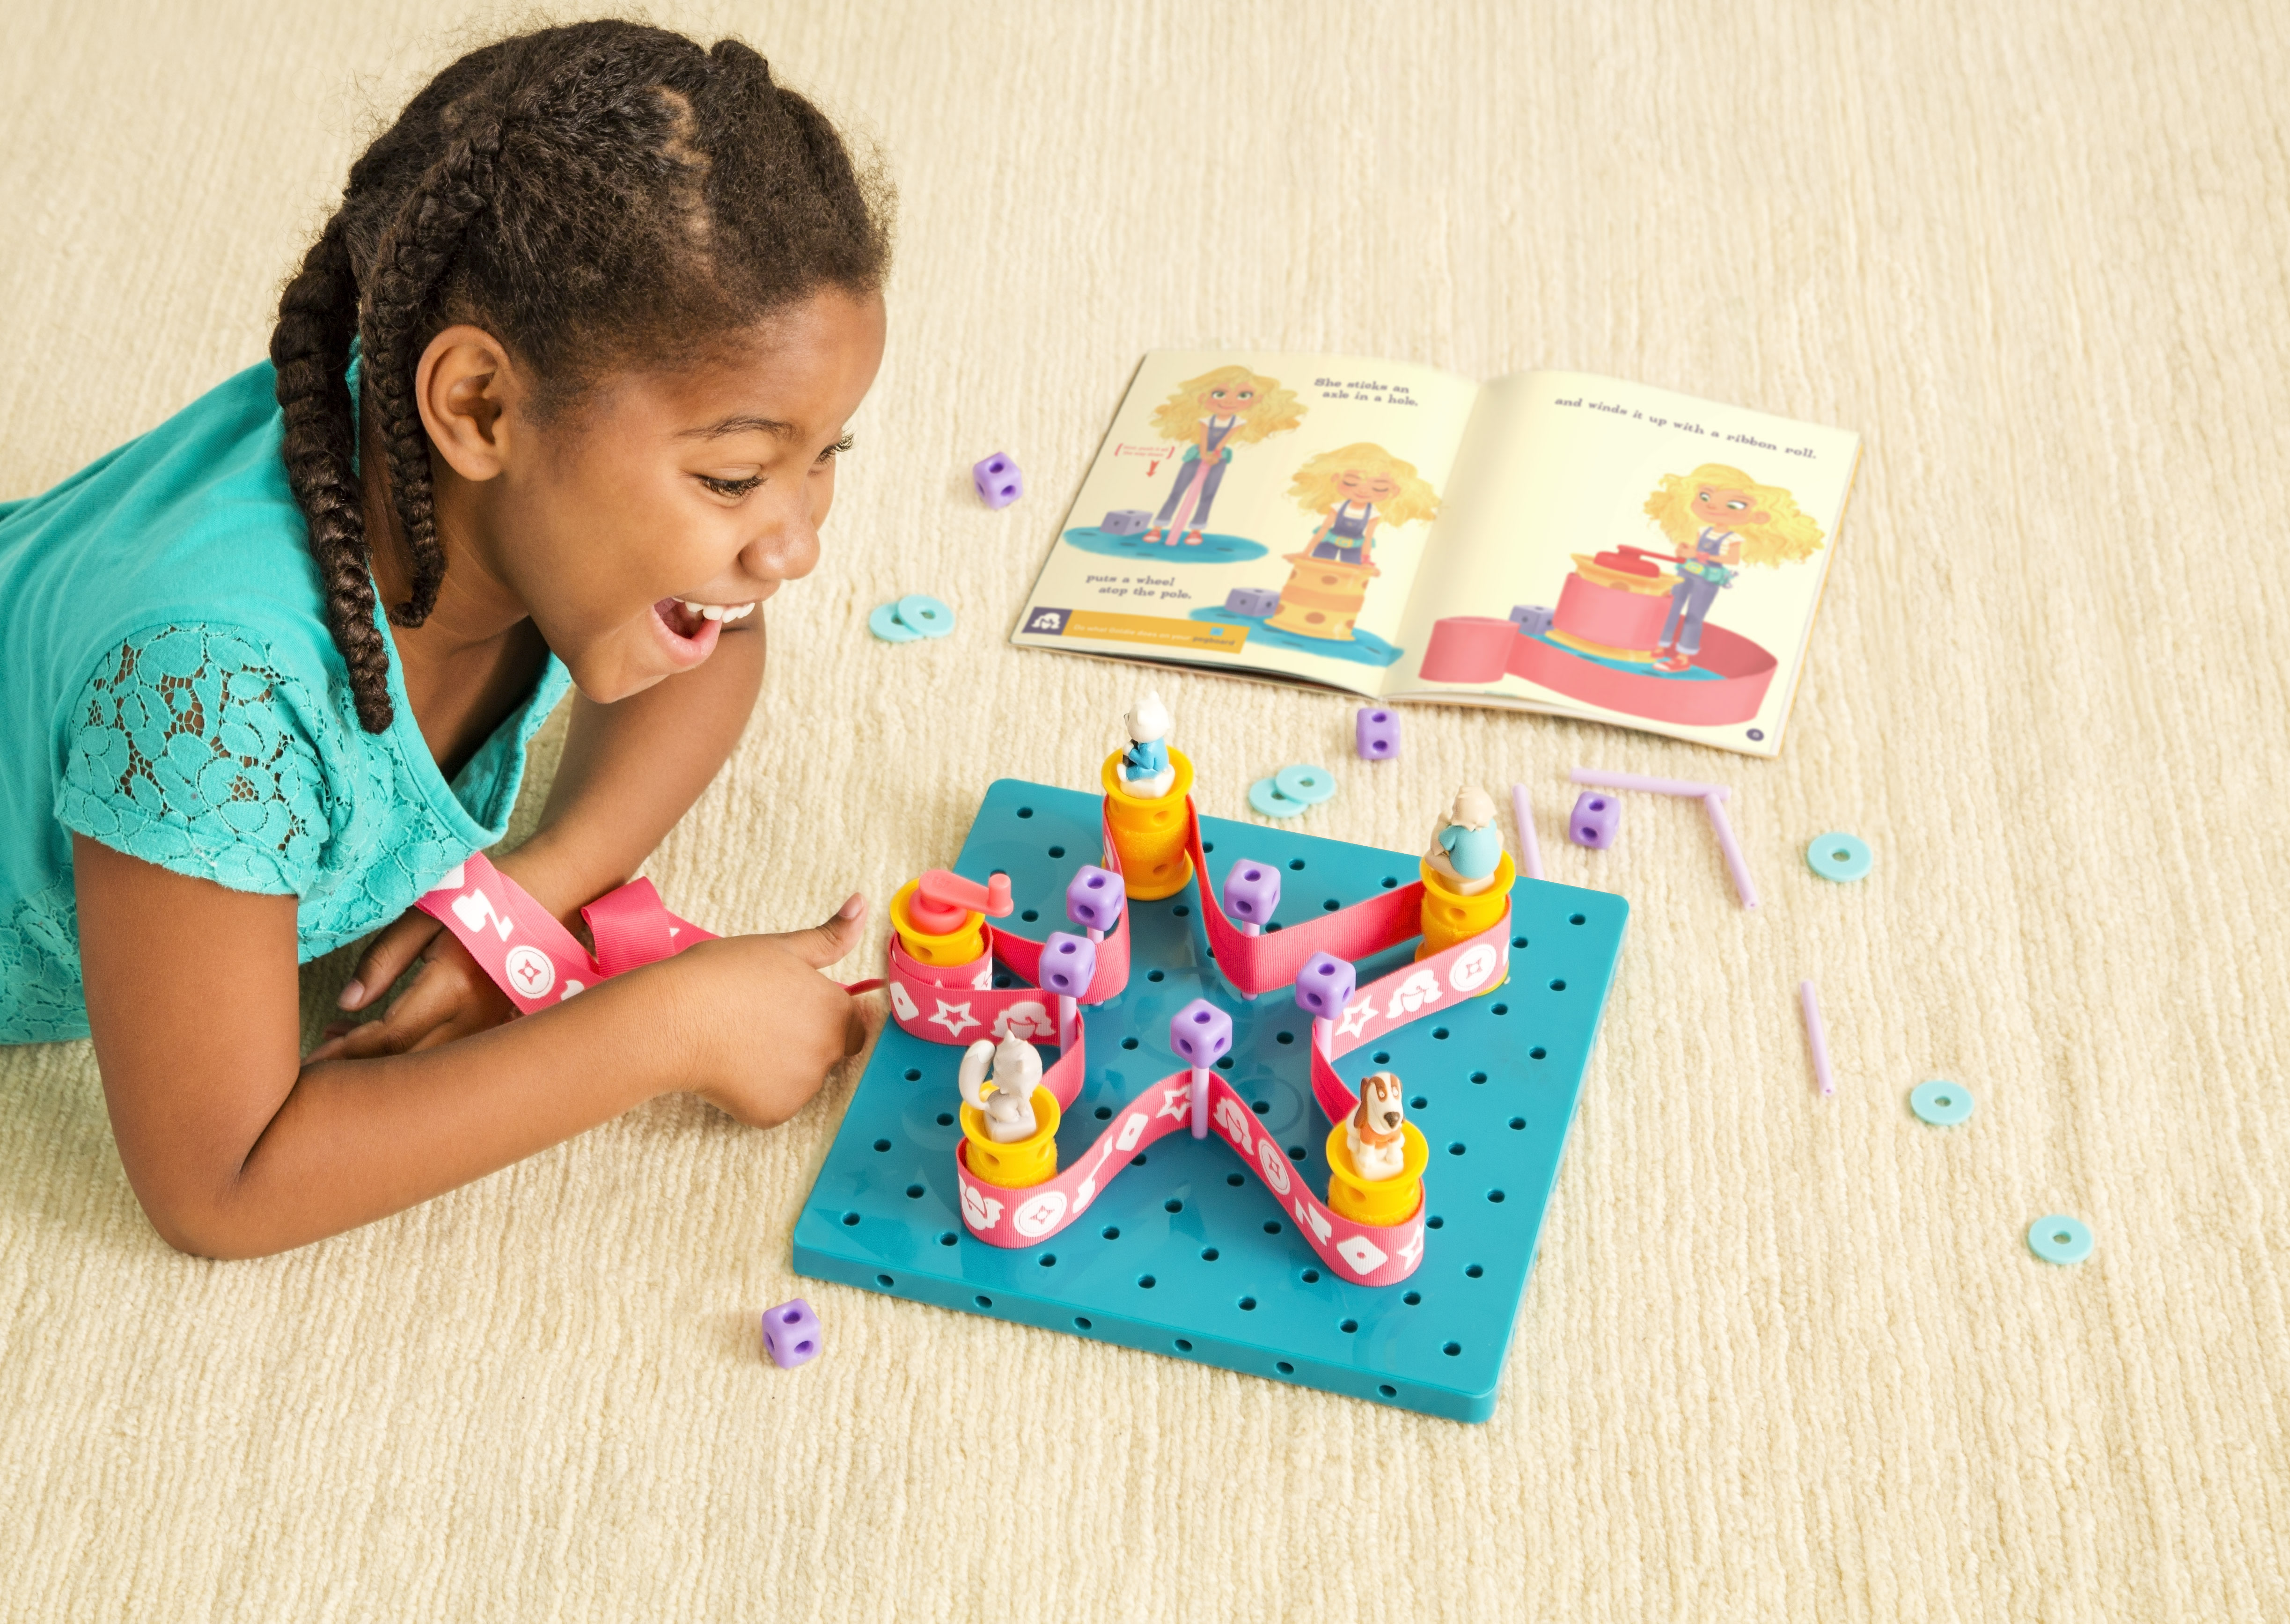 GoldieBlox: The Engineering Toy for Girls by Debbie Sterling — Kickstarter